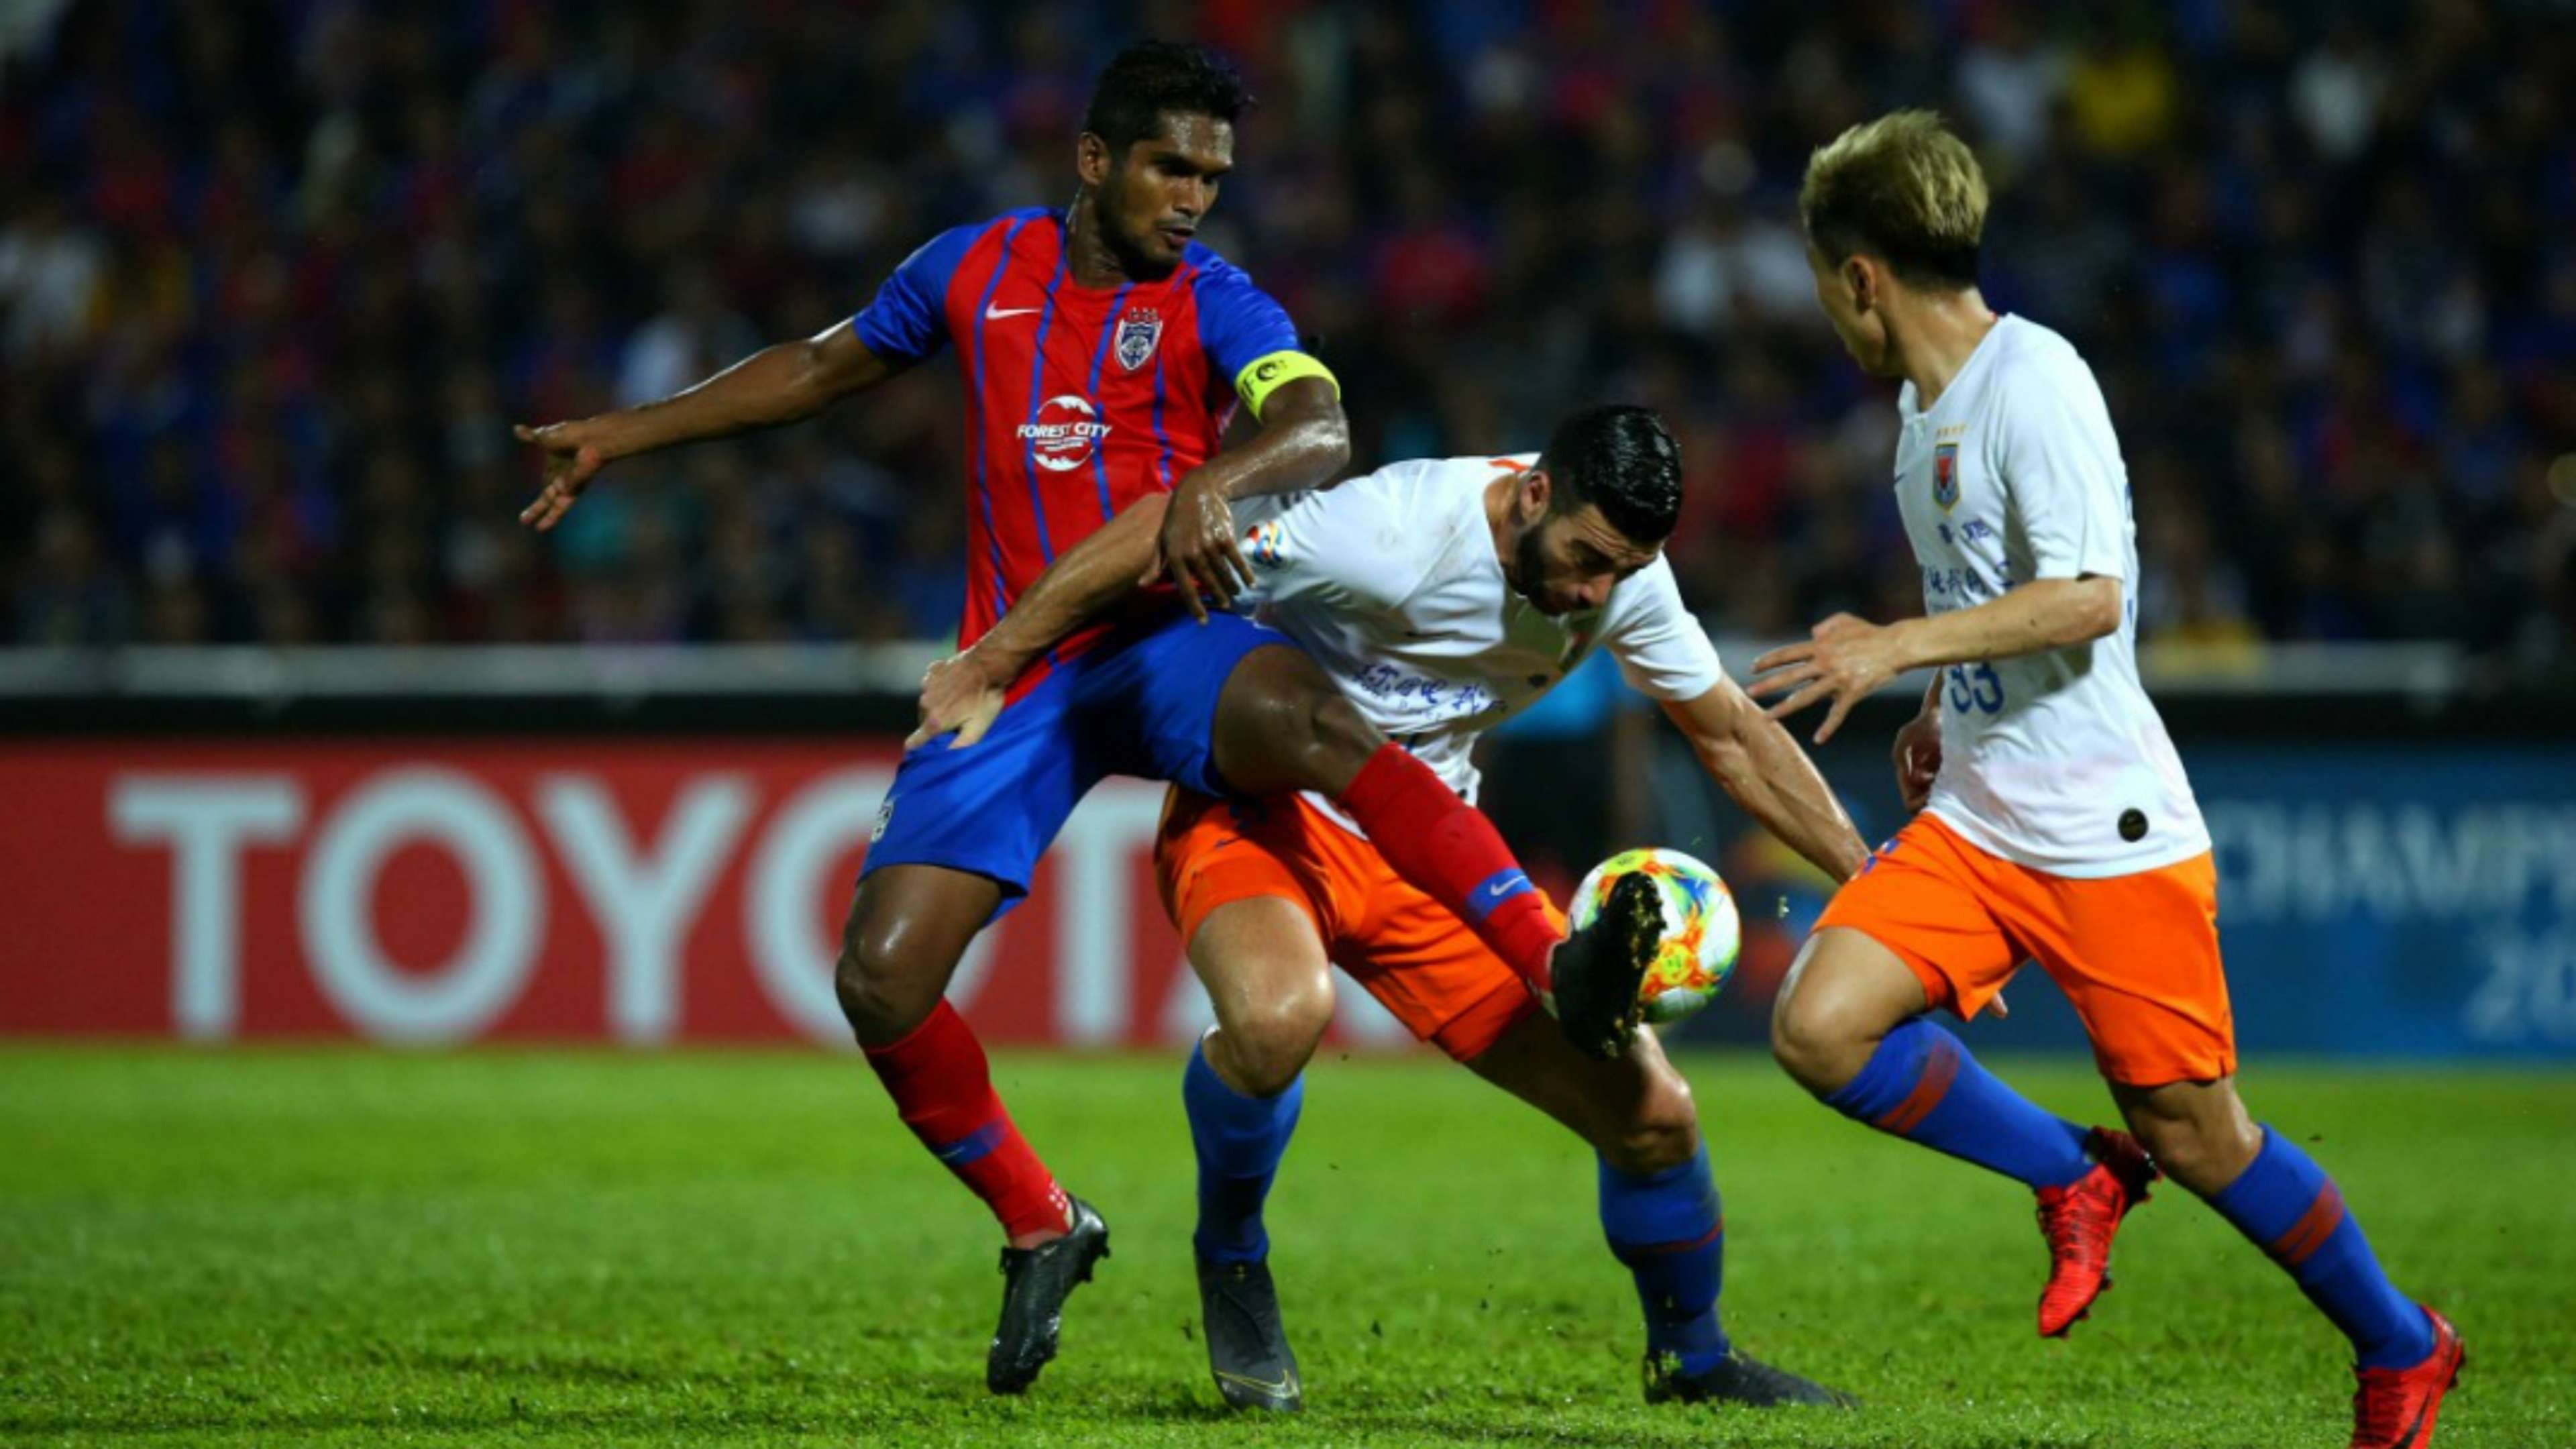 Hariss Harun, Johor Darul Ta'zim v Shandong Luneng, AFC Champions League, 24 Apr 2019